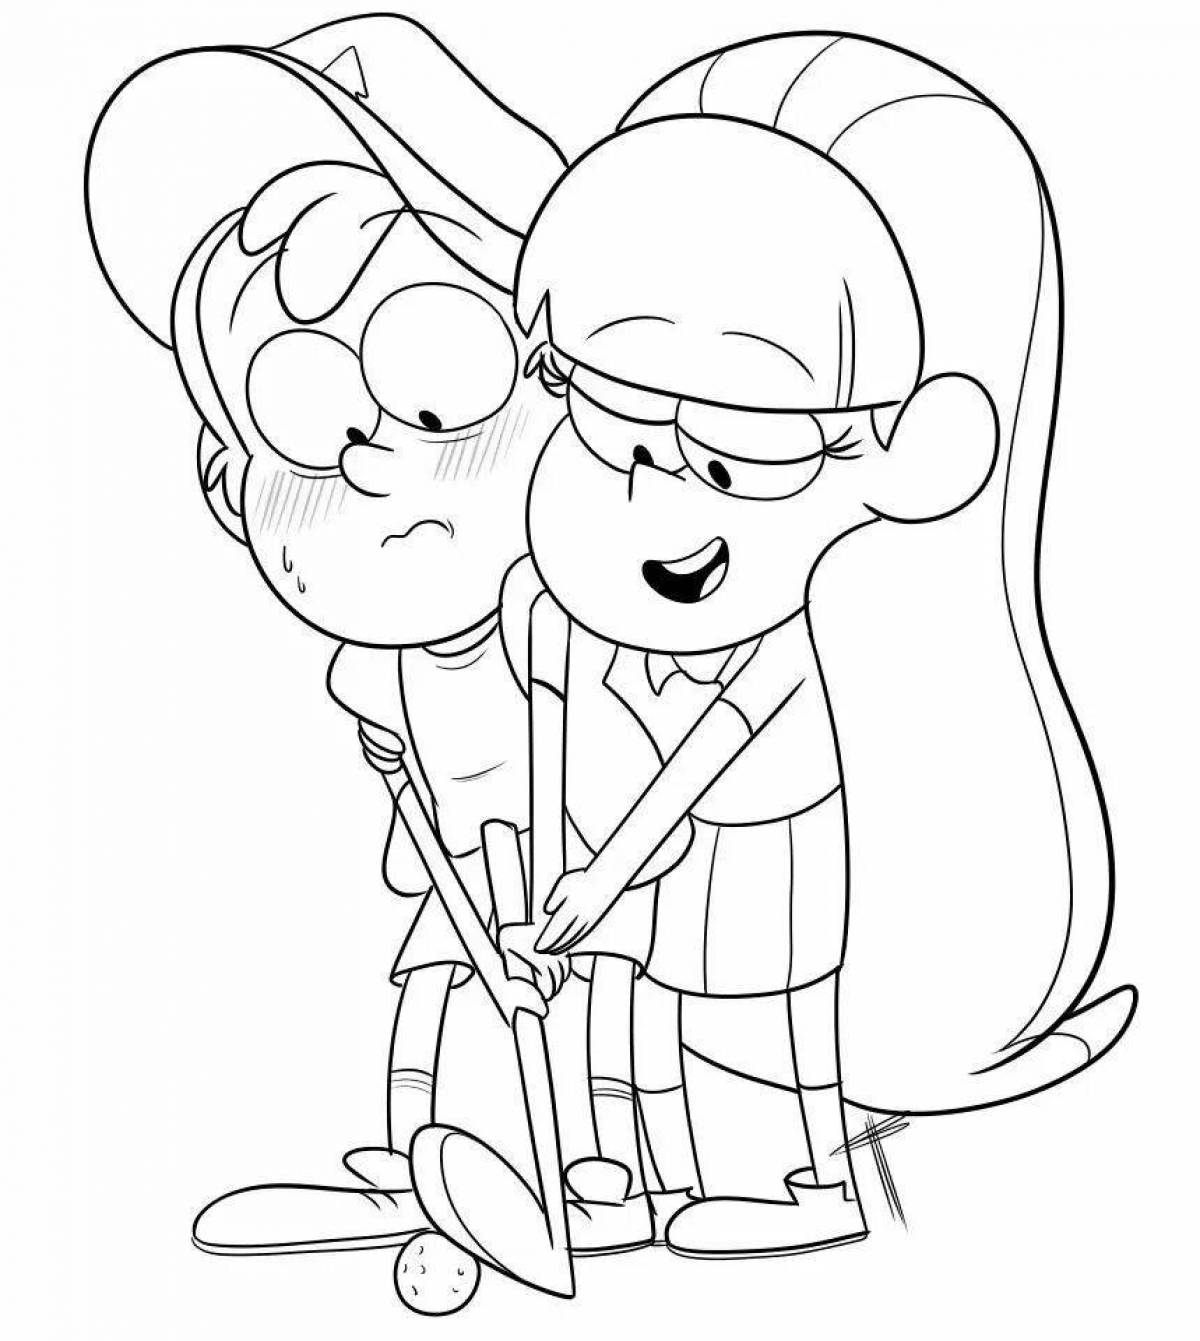 Mabel and dipper #2